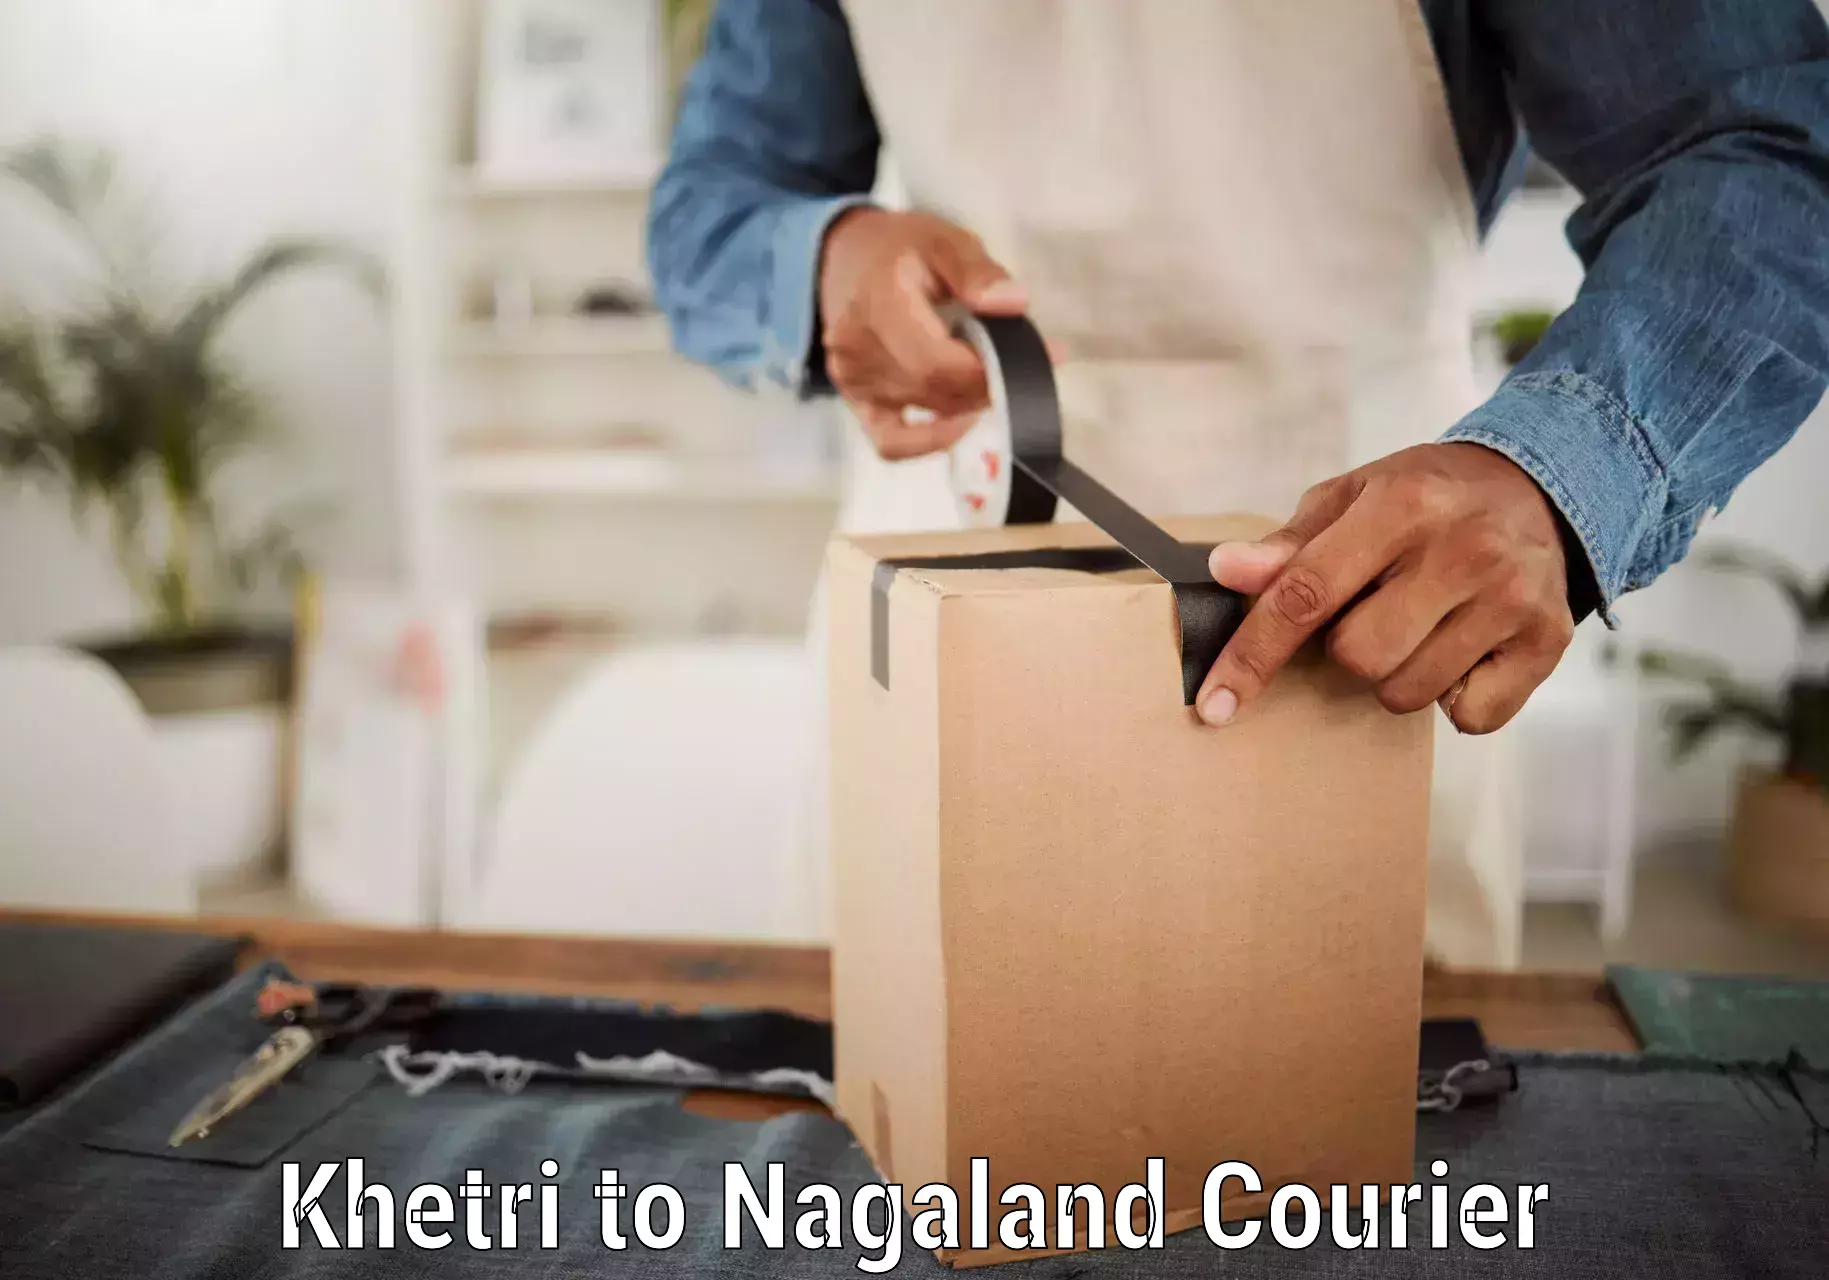 Efficient order fulfillment Khetri to Nagaland